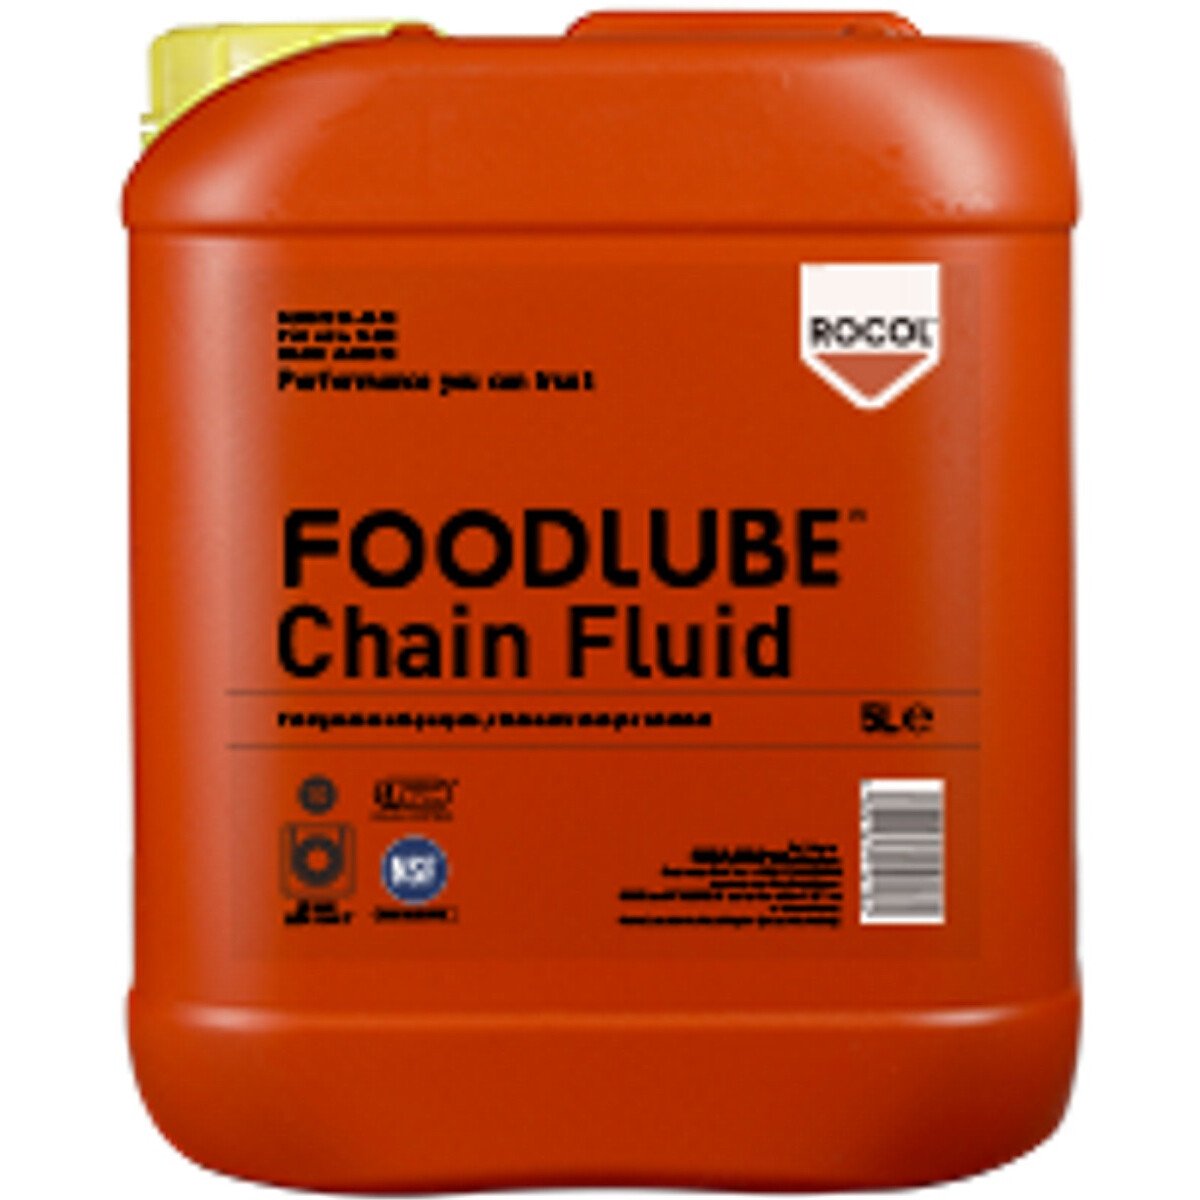 Rocol 15506 FOODLUBE CHAIN FLUID (NSF Registered) 5ltr